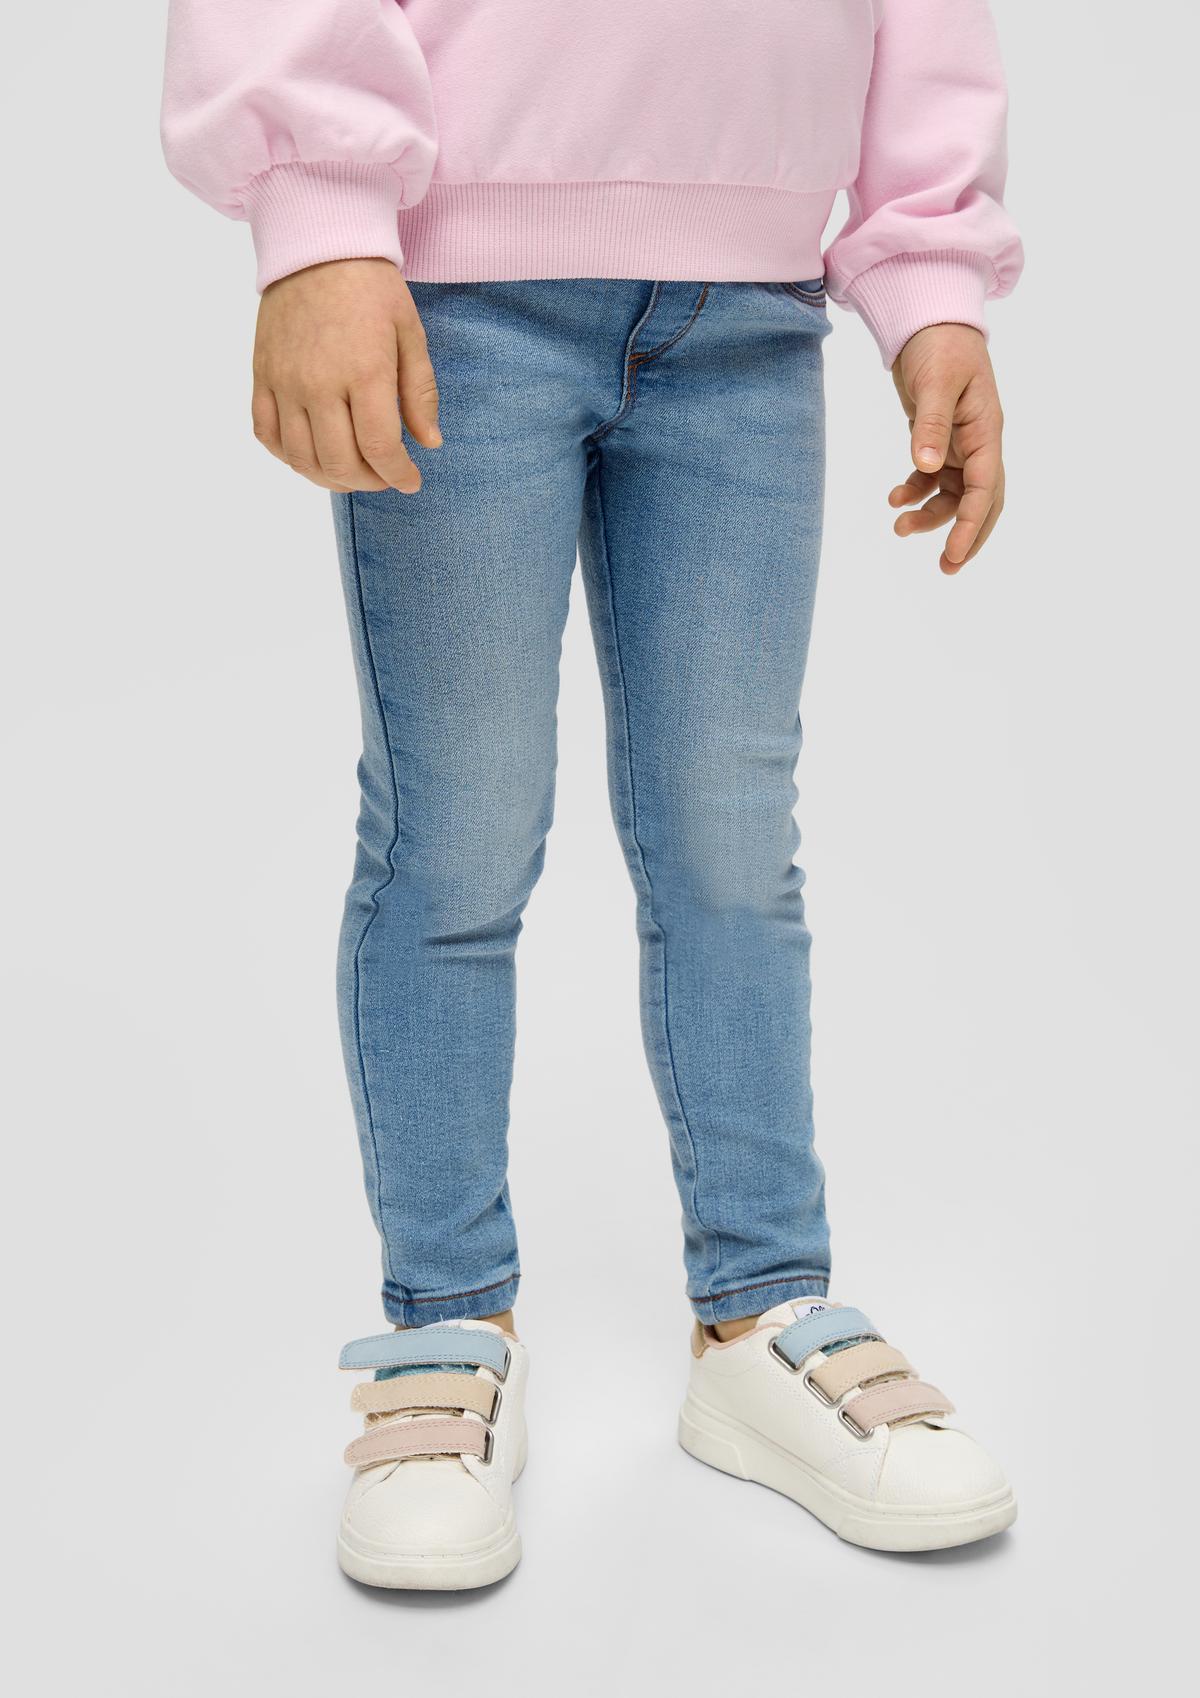 s.Oliver Jeans tregging / regular fit / high rise / tapered leg